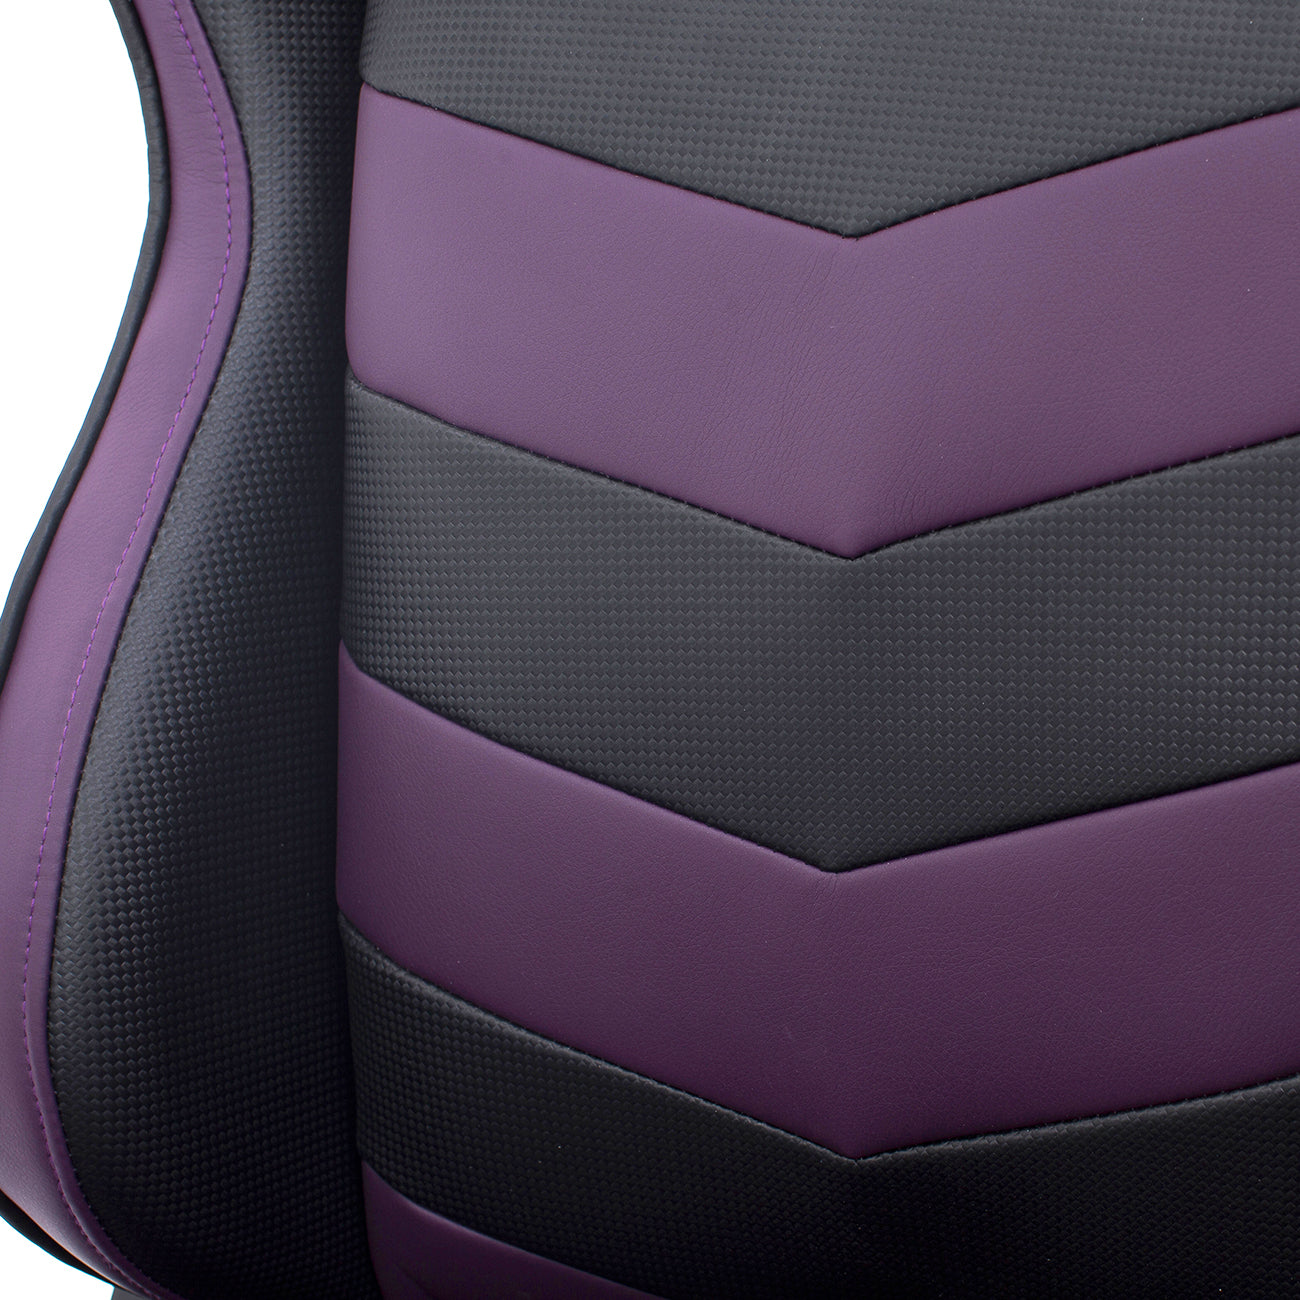 Techni Sport TS-61 Ergonomic High Back Racer Style Video Gaming Chair, Purple/Black